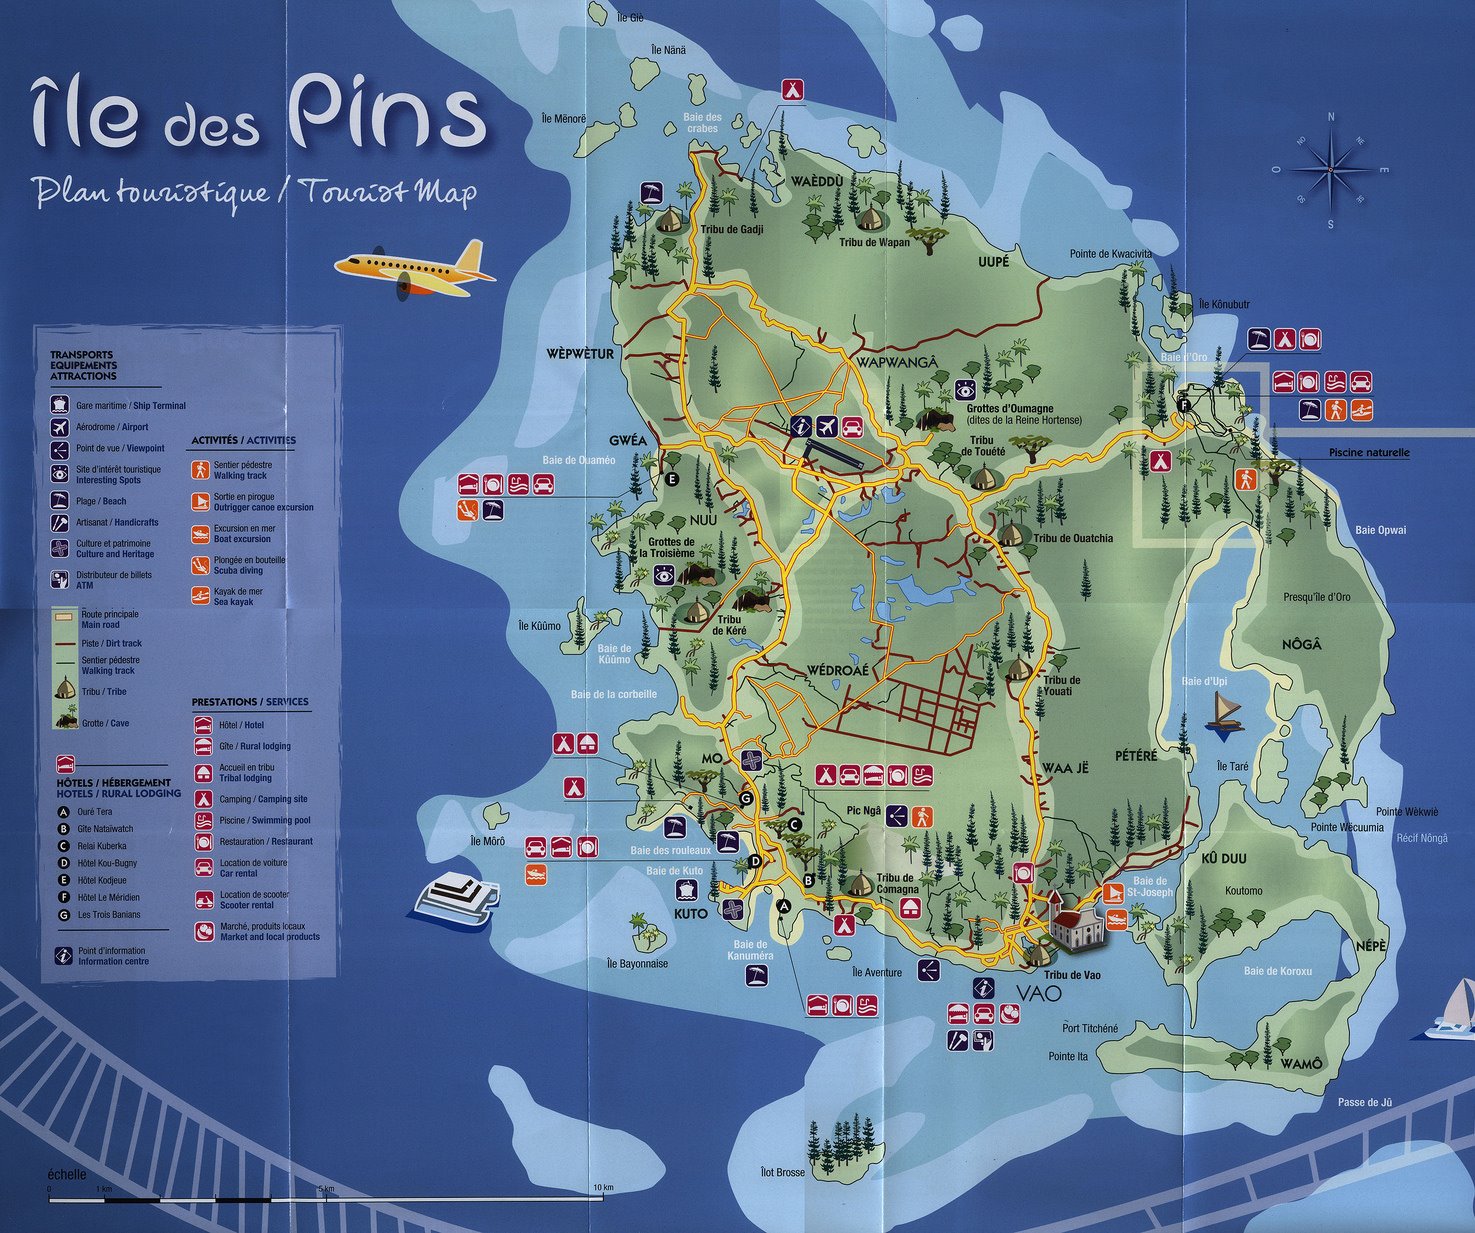 Открой карту островов. Острова на карте. Остров Каyта. Карта острова схема. Географическая карта острова.